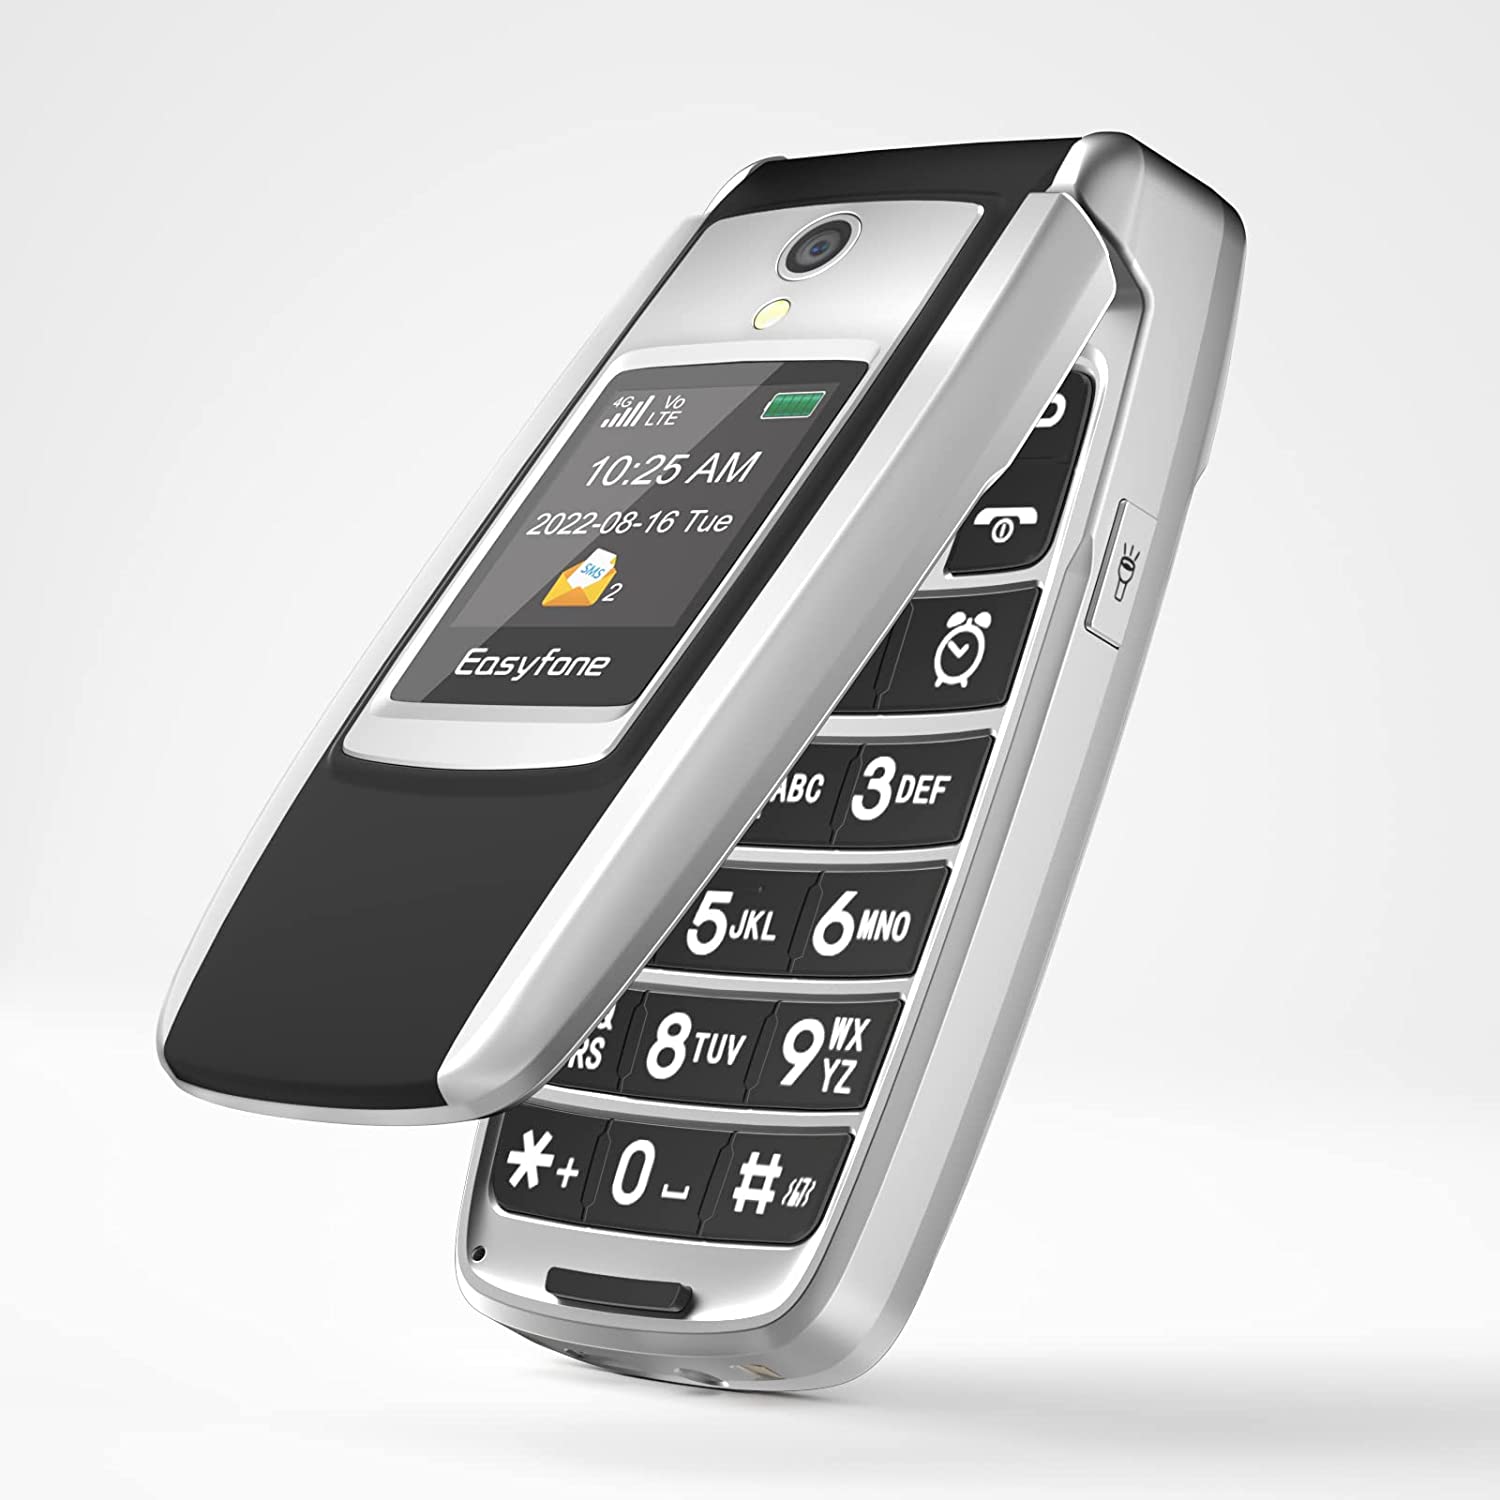 Easyfone T300 4G LTE Phone